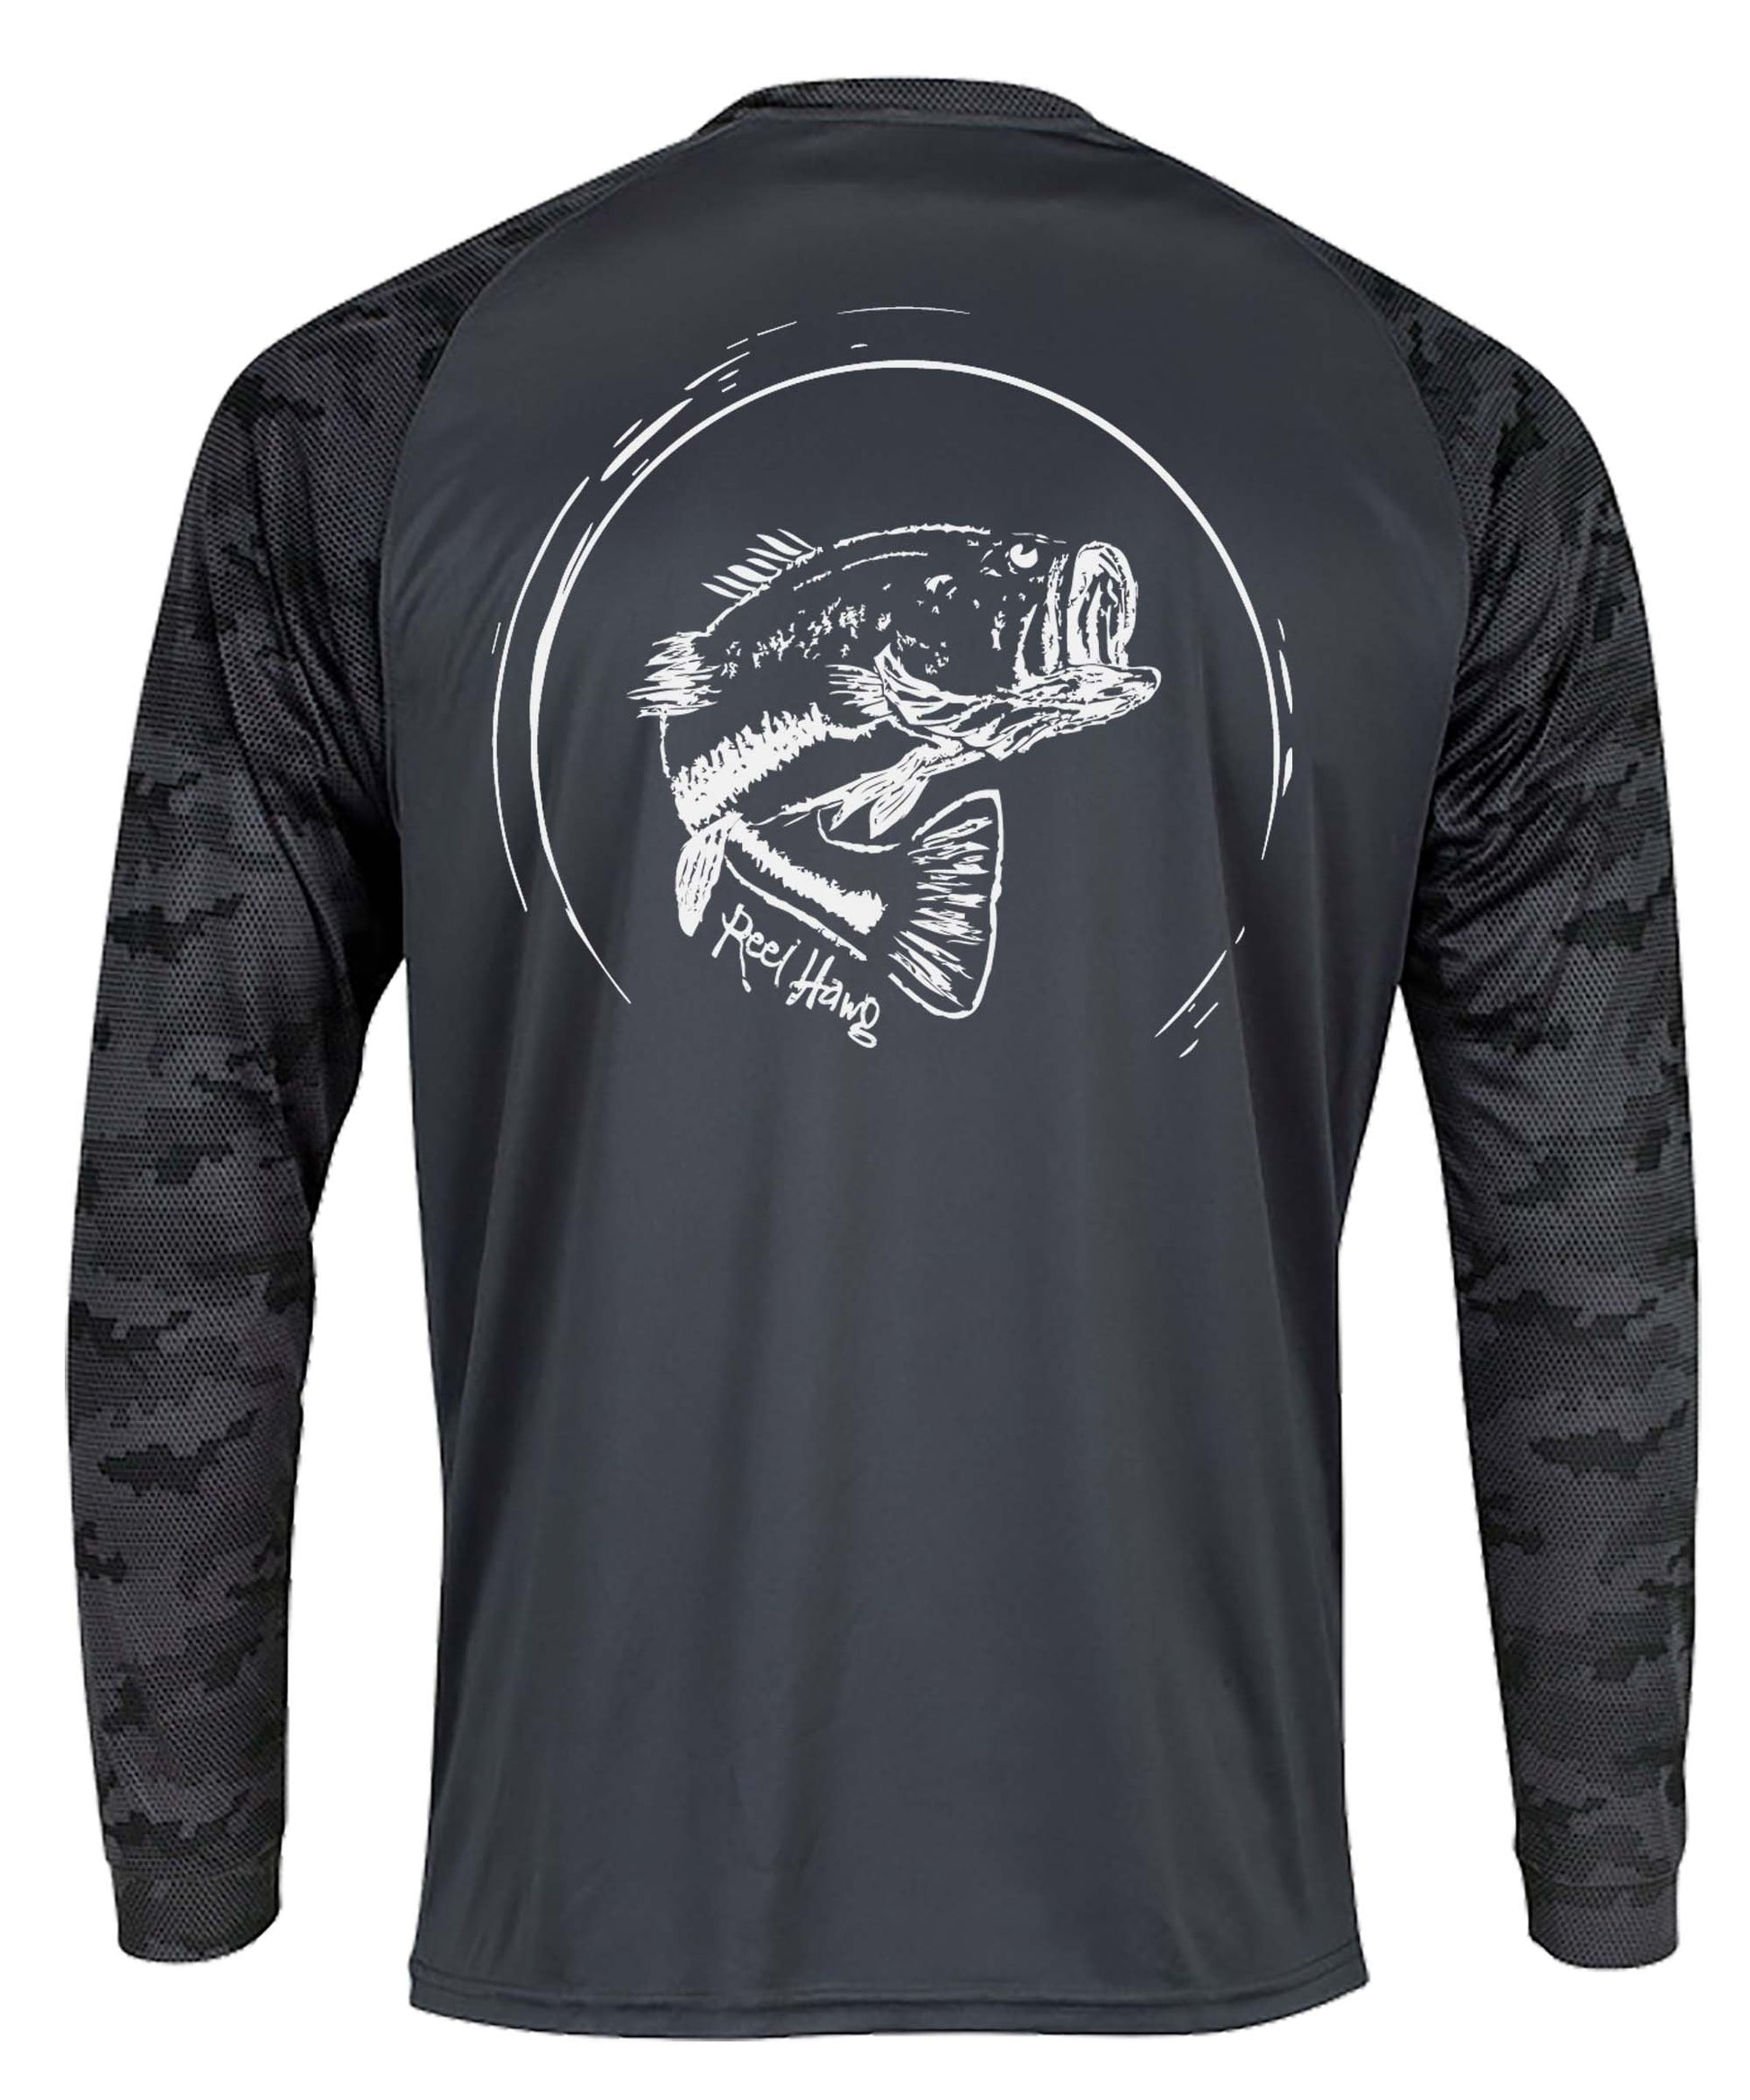 Bass Fishing Performance Dry-Fit 50+ UPF Sun Protection Shirts -Reel Fishy Apparel 2XL / Graphite Camo L/S - unisex